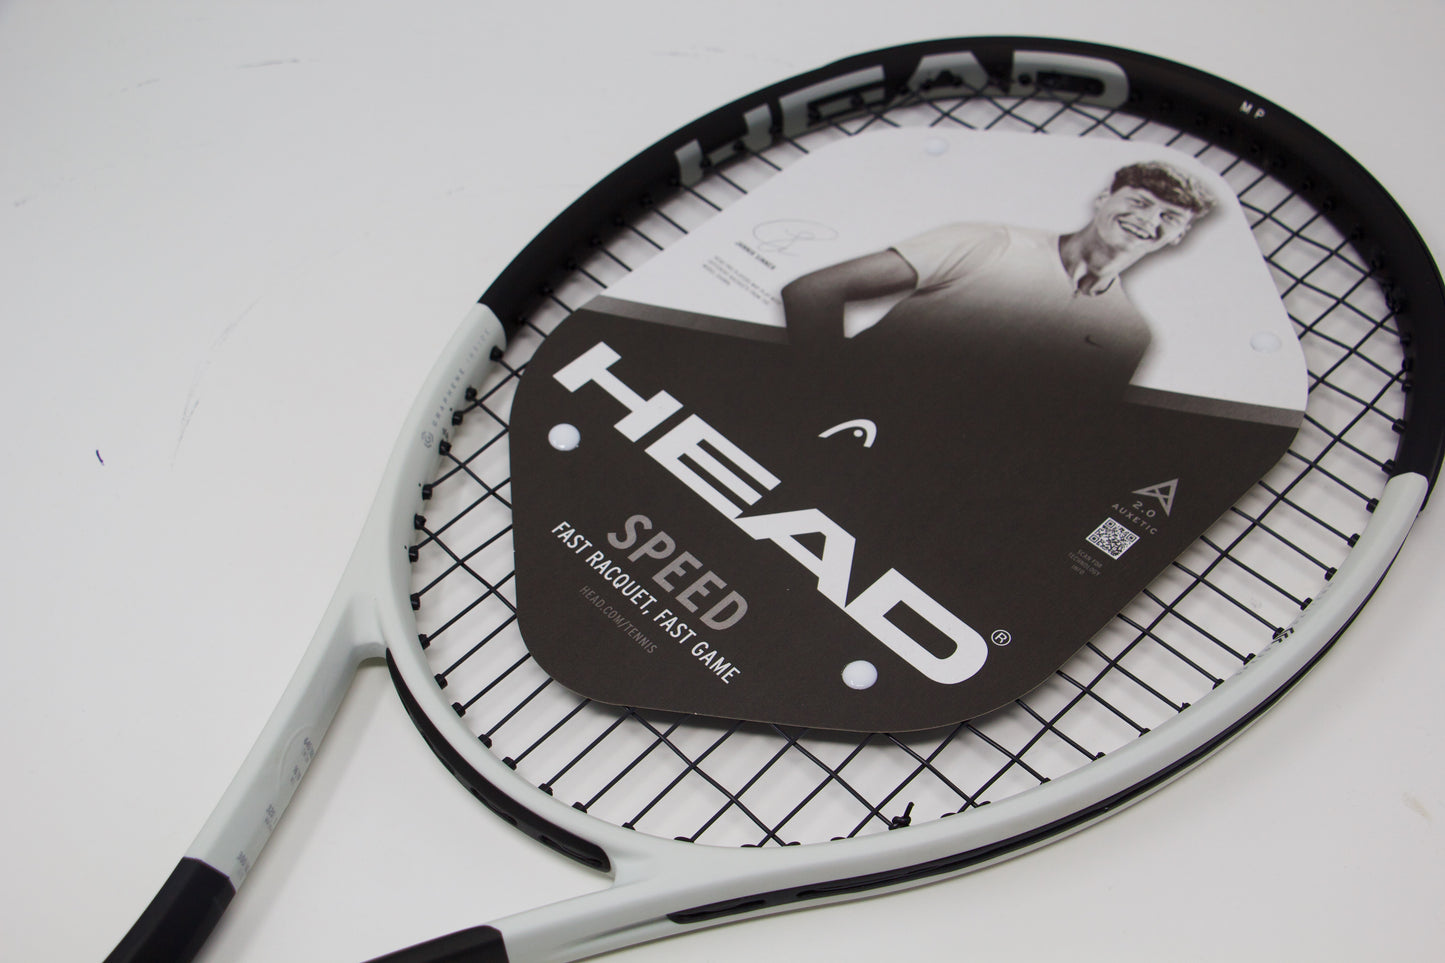 Head Speed MP Lite Tennis Racket (2024)